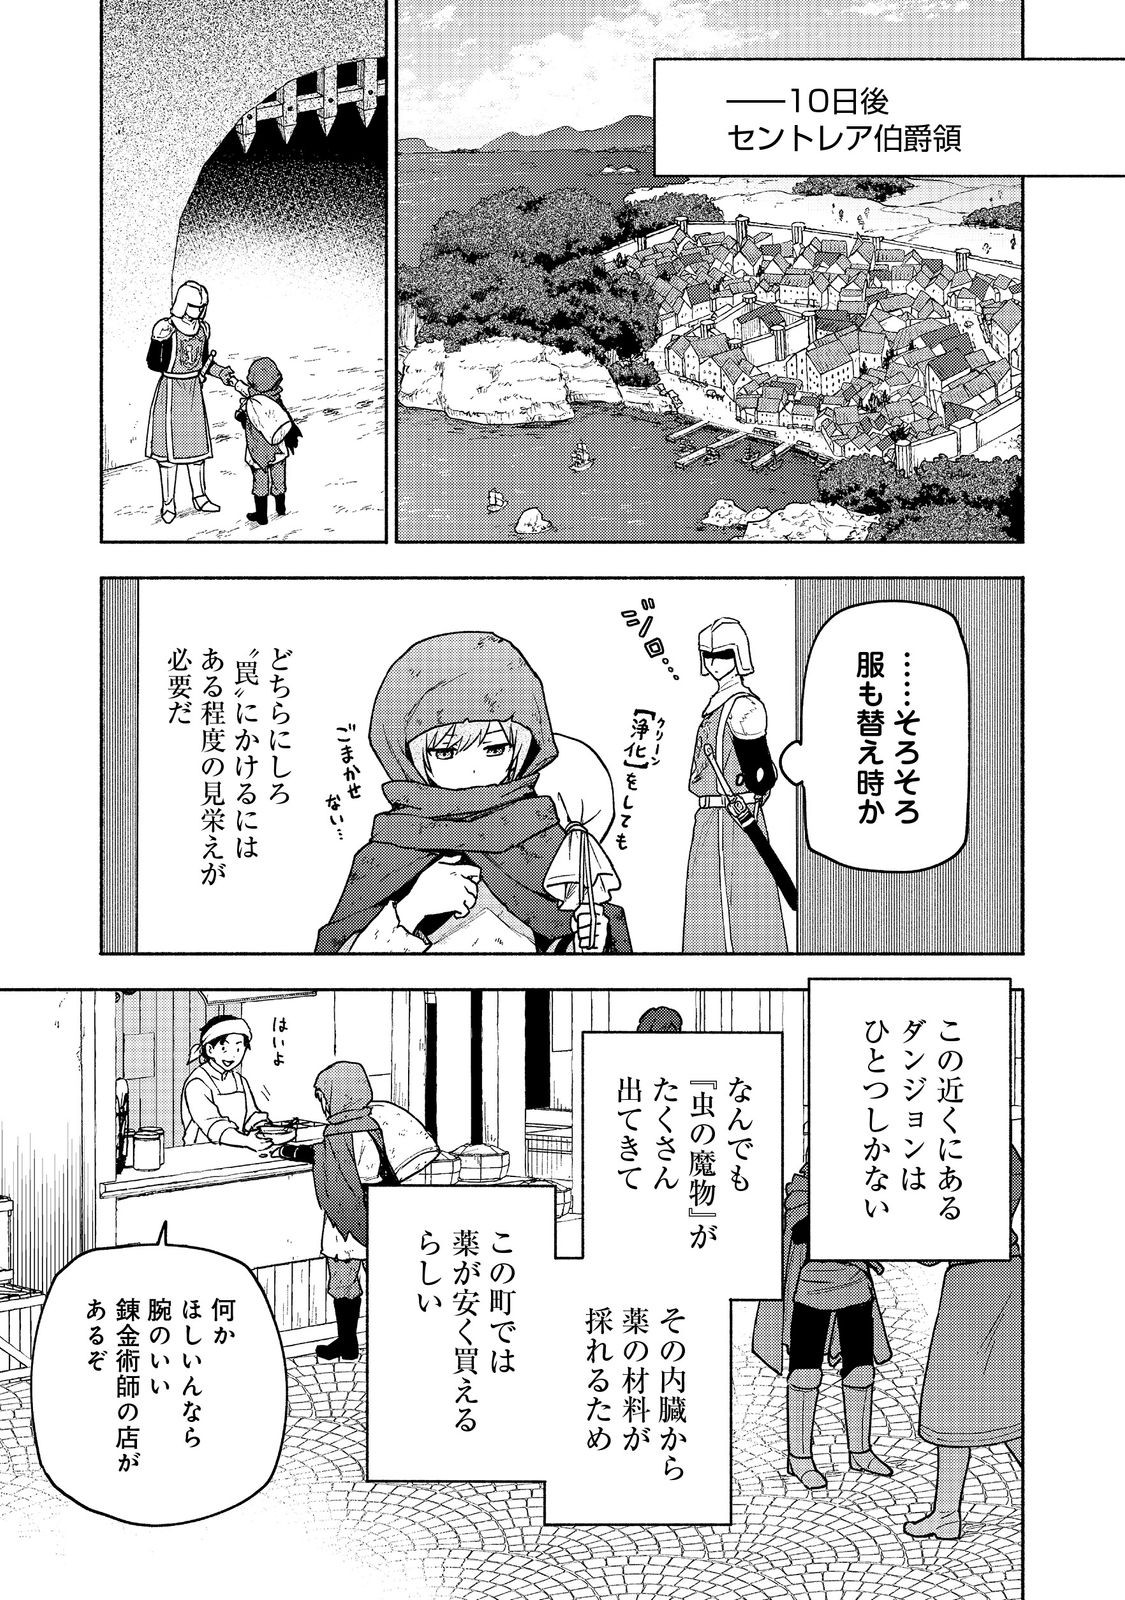 Otome Game no Heroine de Saikyou Survival - Chapter 19.2 - Page 1